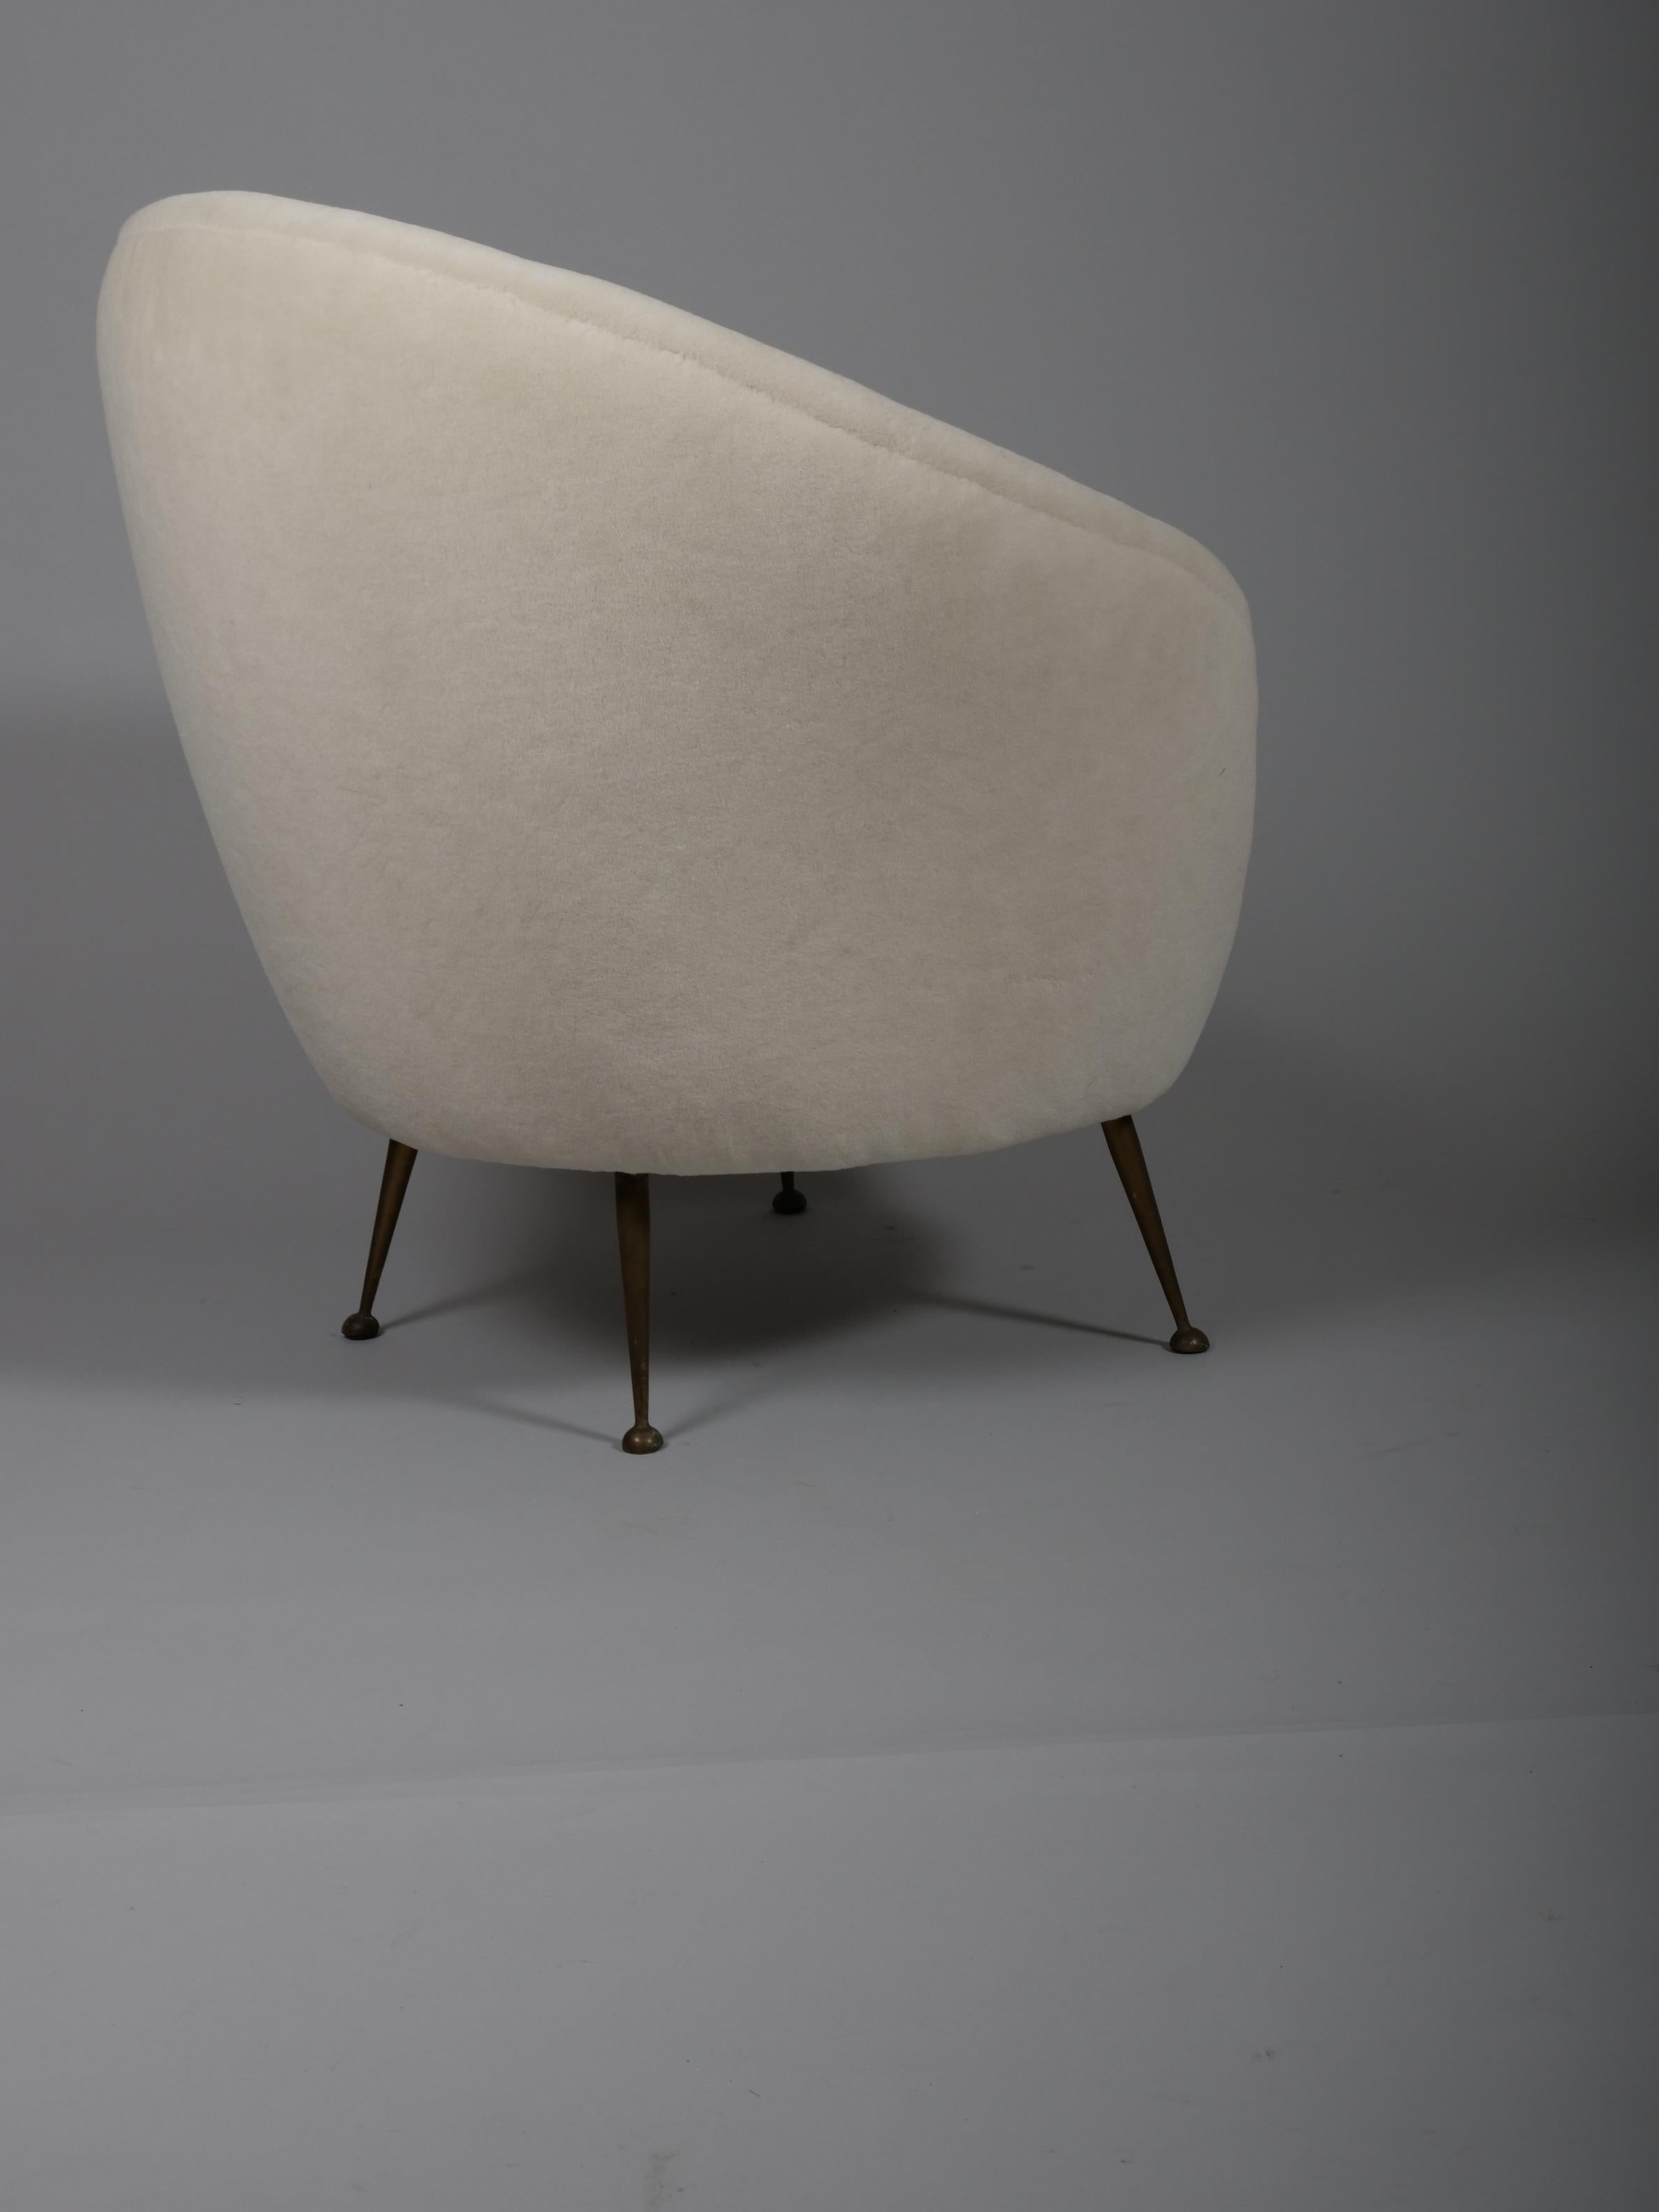 Pair Italian mid century egg shape chairs. Re upholstered in Alpaca wool velvet For Sale 7